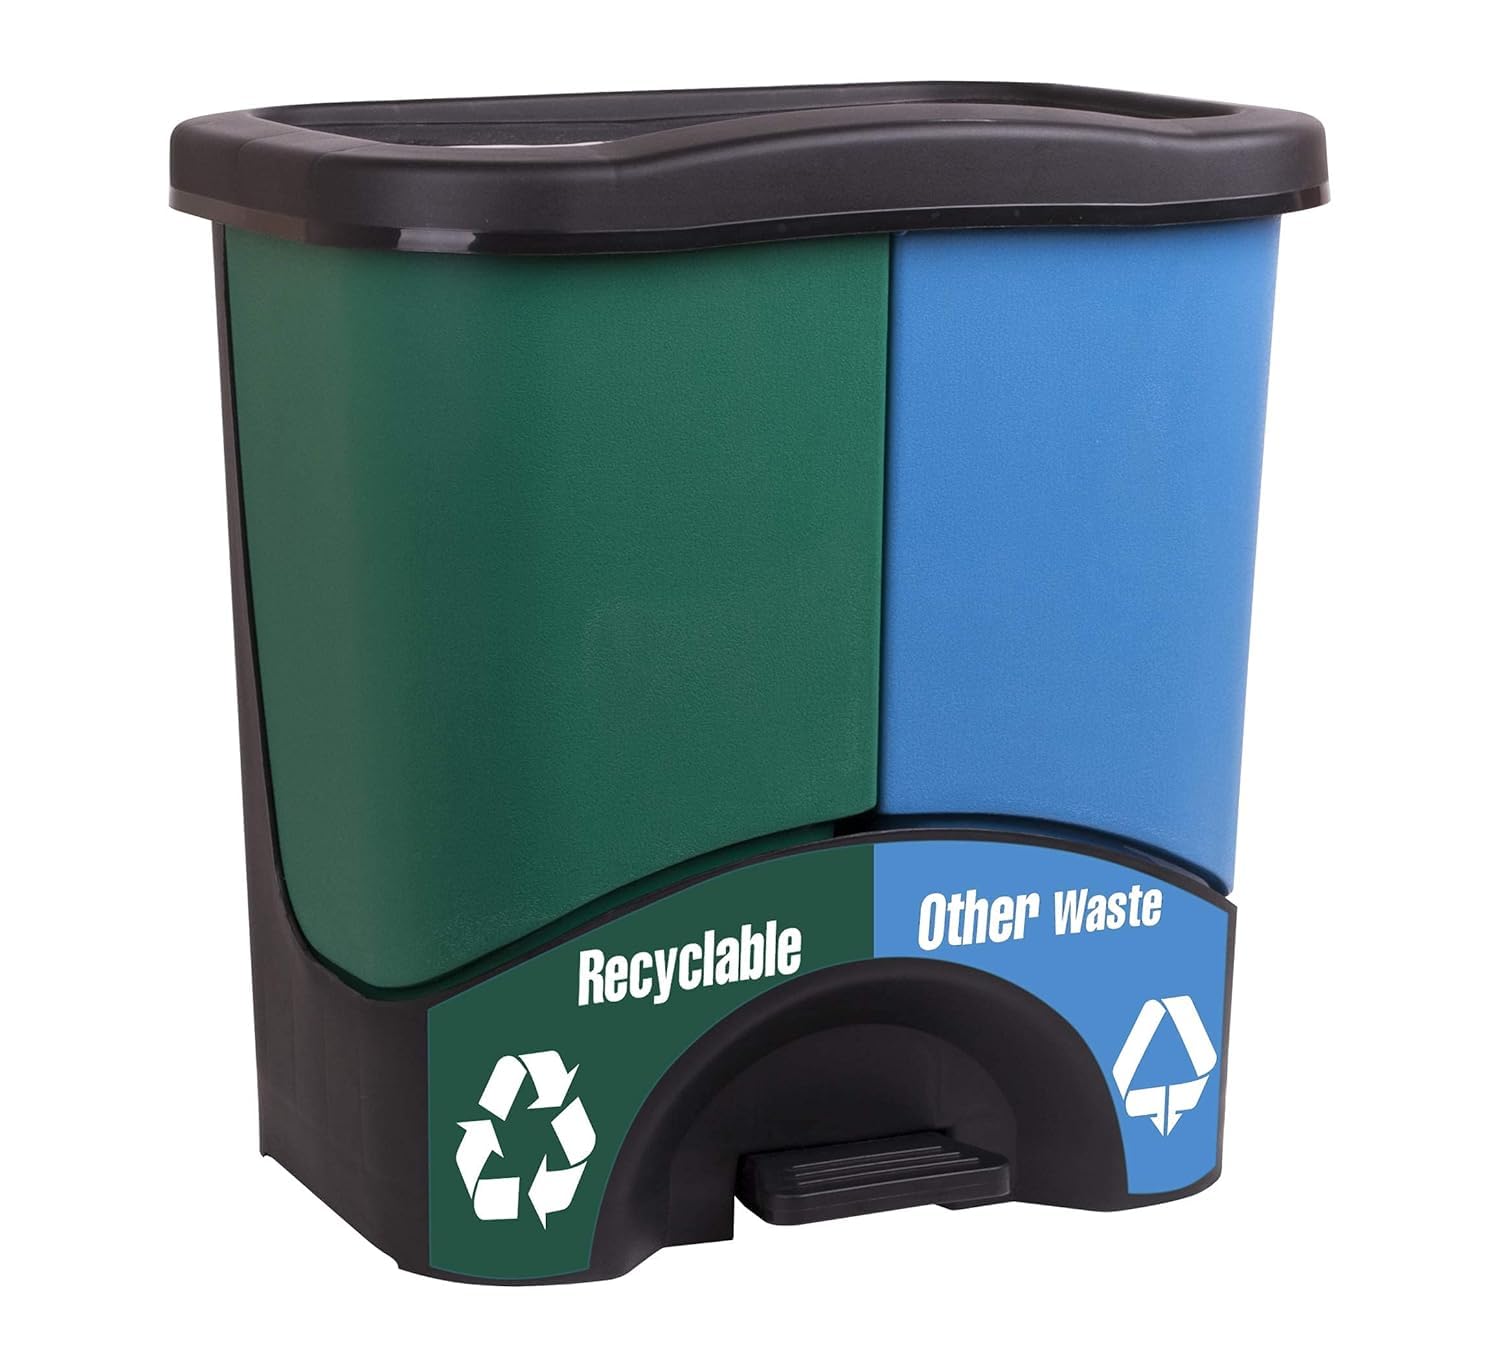 Mintra Home Trash Bins – Green/Blue Review